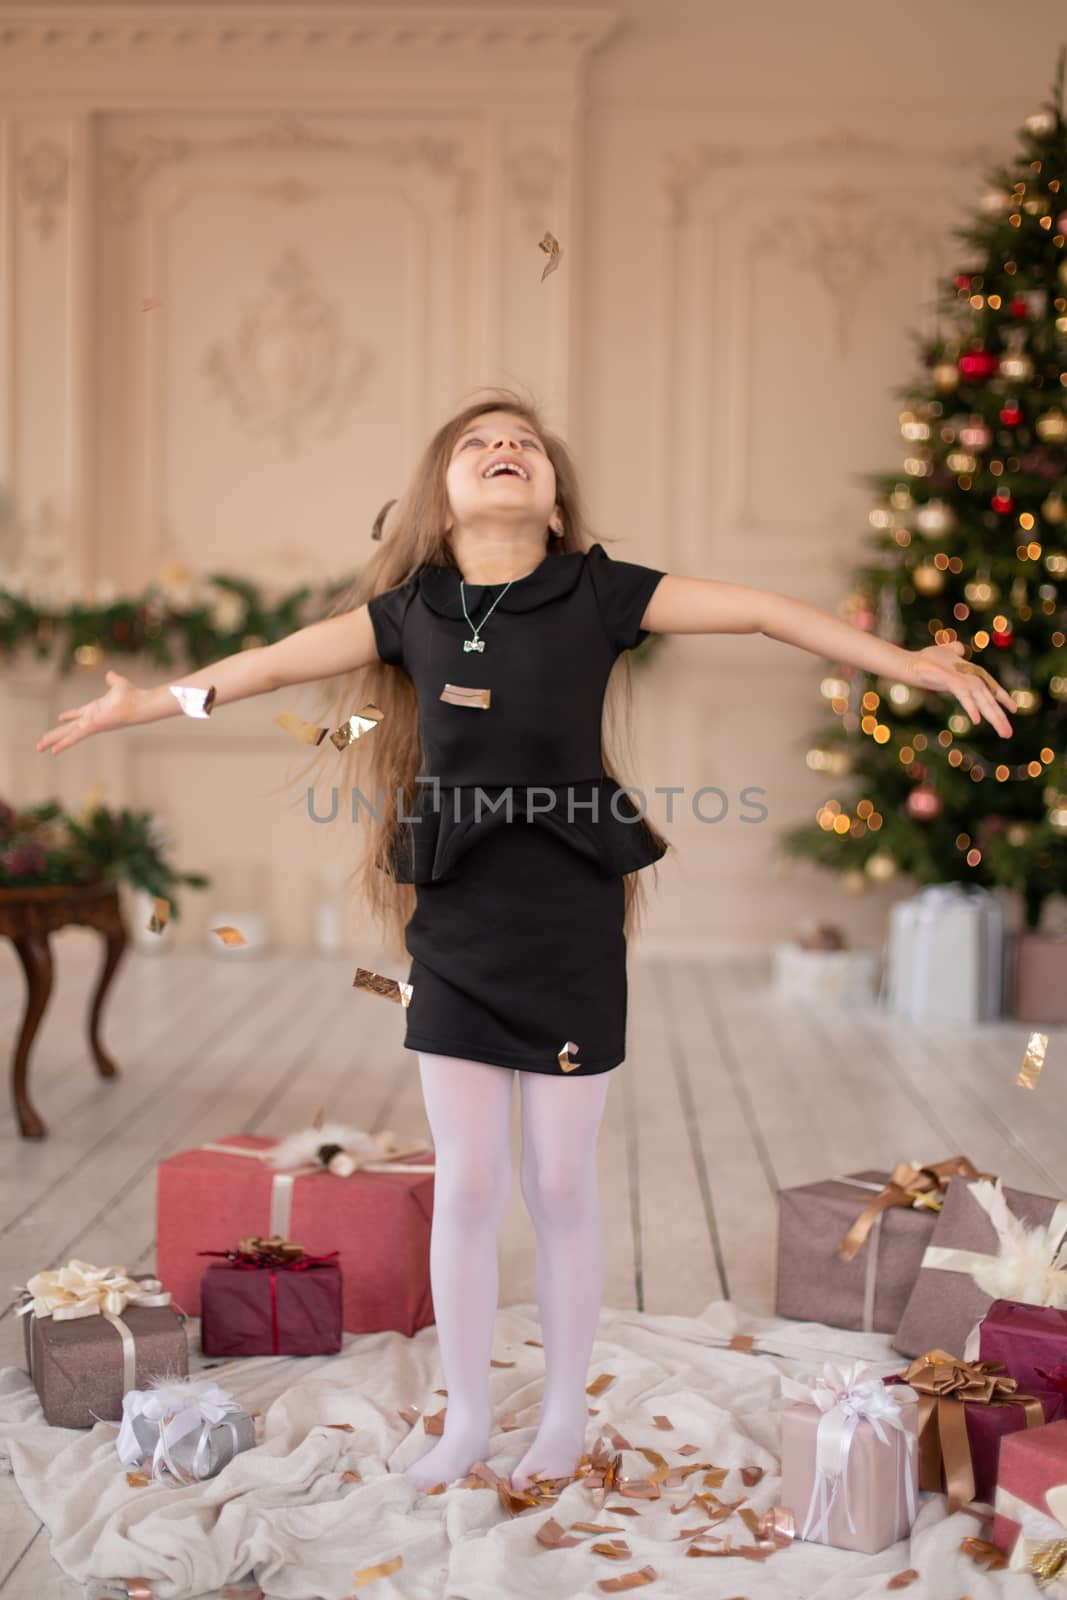 Little girl throws confetti. Christmas magic. Joyful moments of a happy childhood.